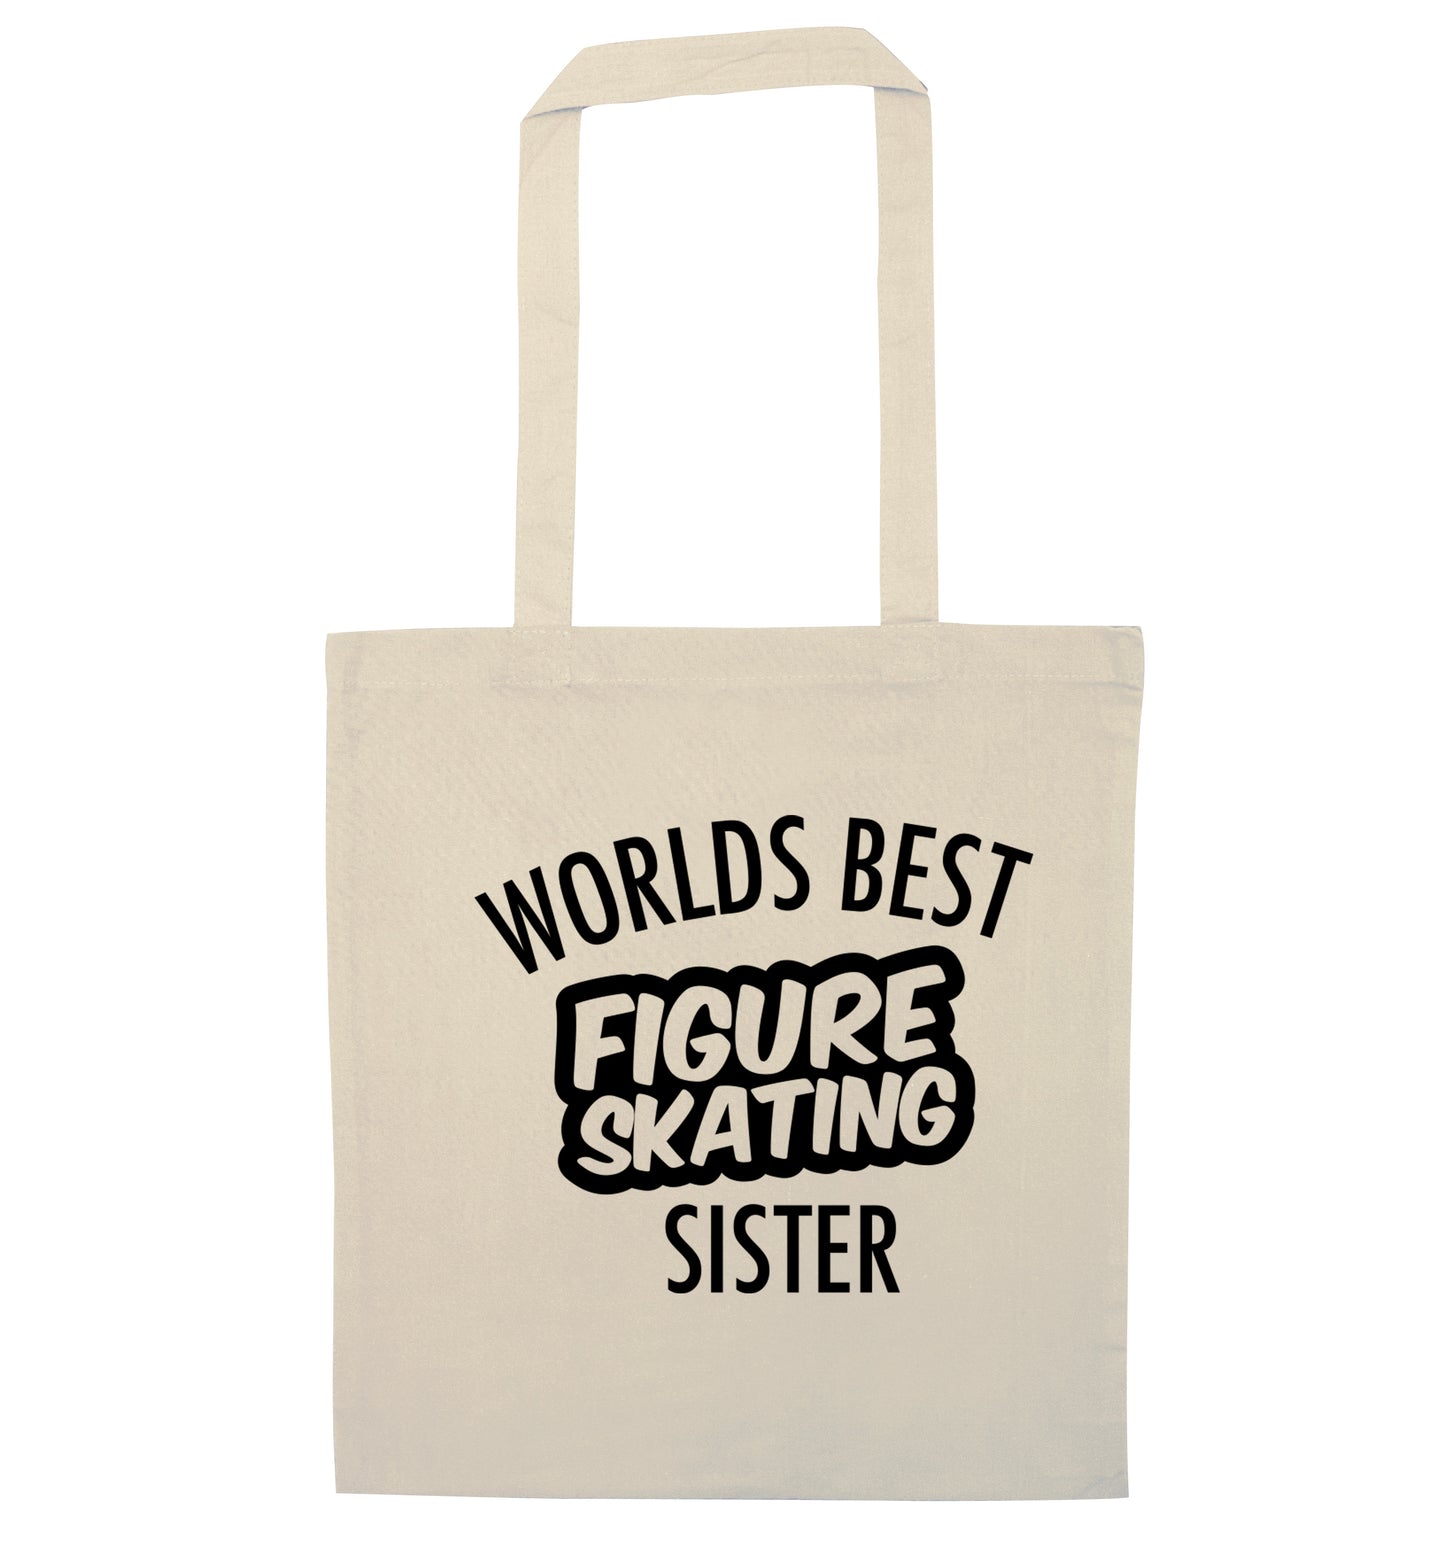 Worlds best figure skating sisternatural tote bag